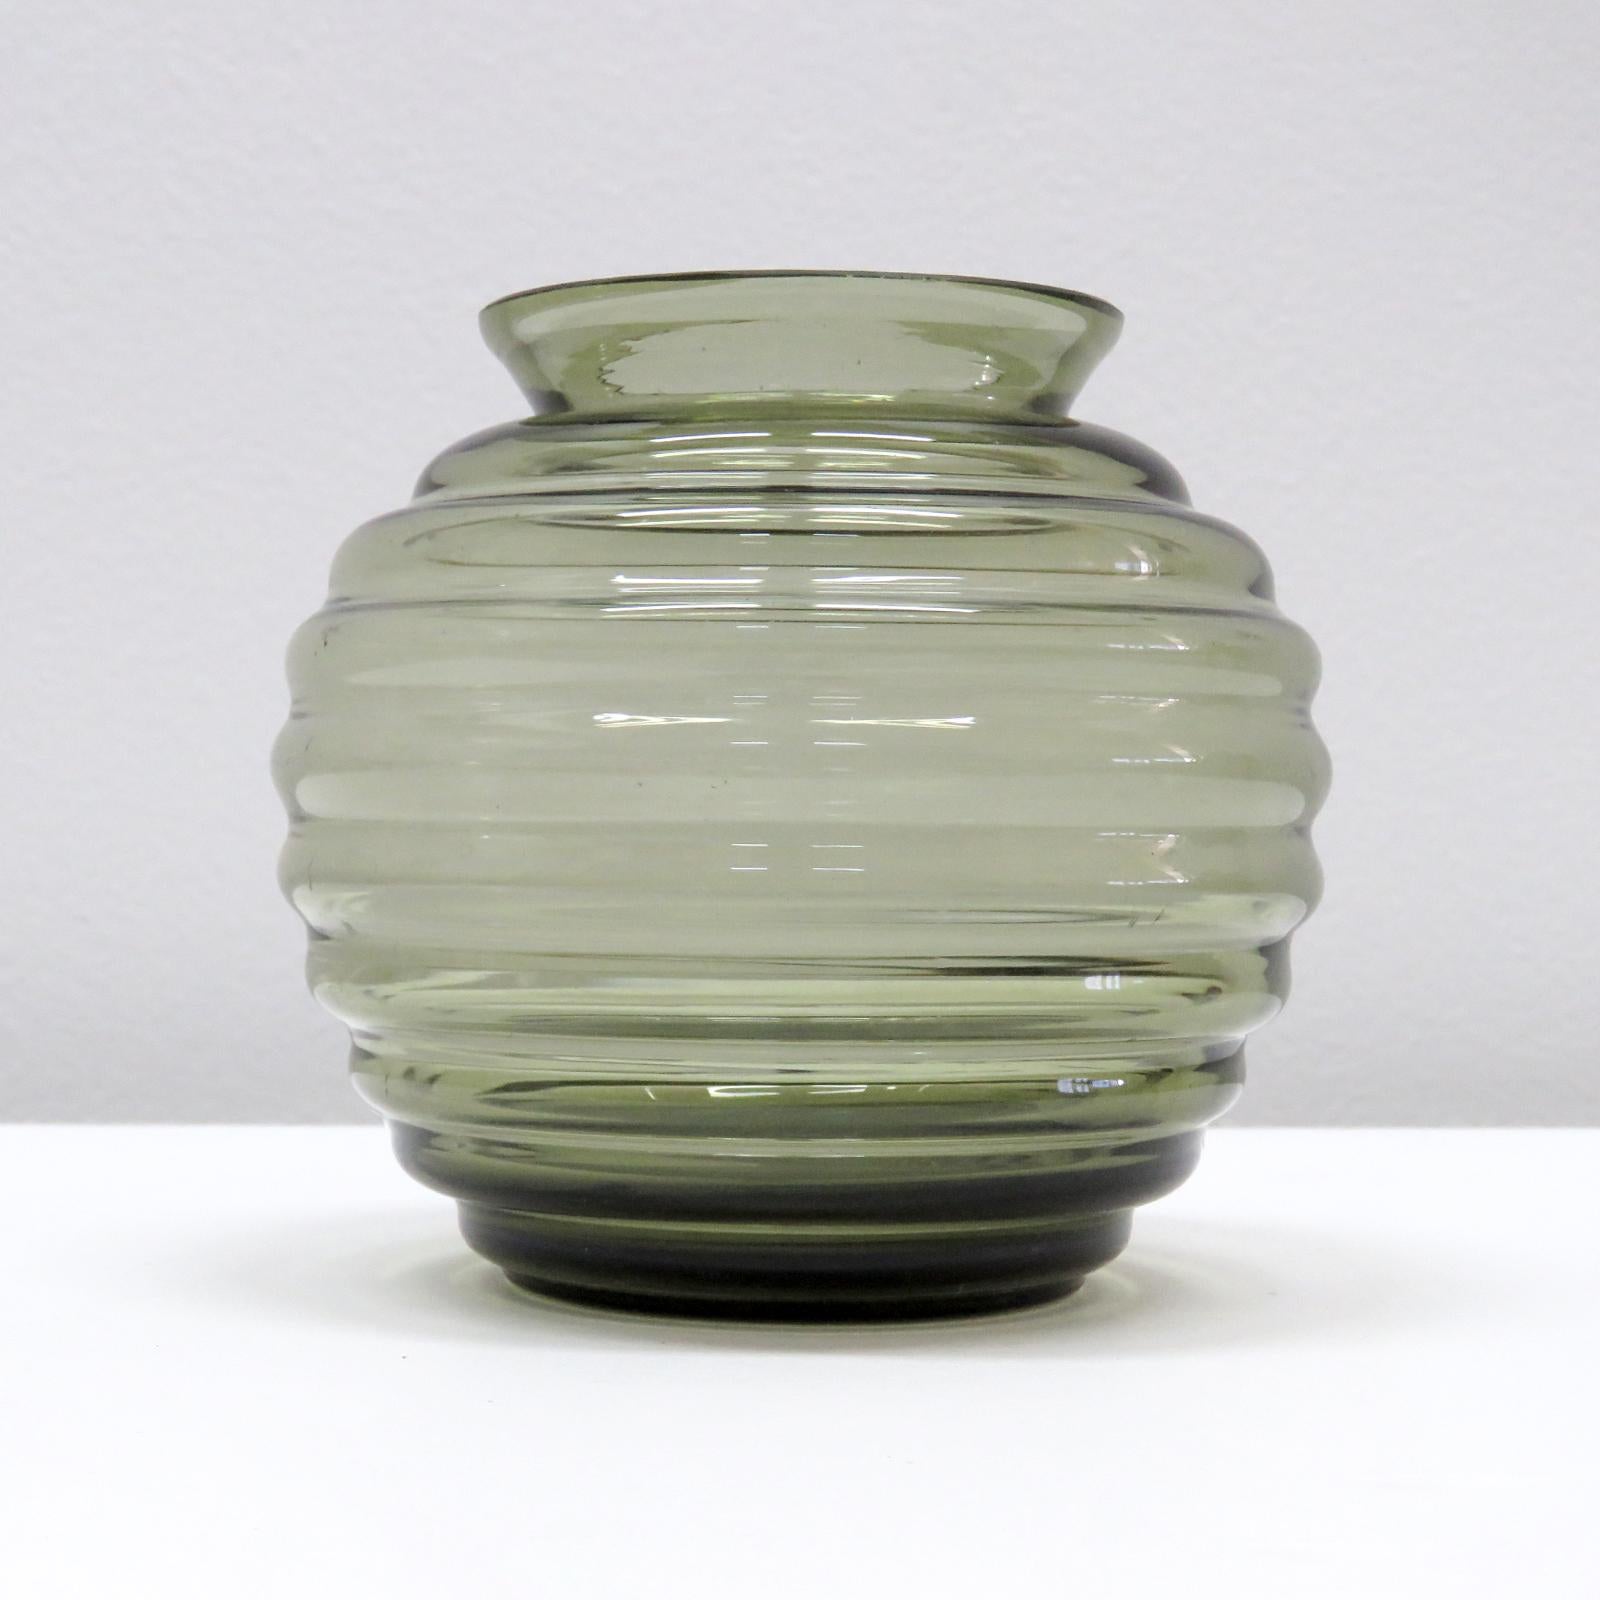 wonderful turmalin vase 'Felicitas' designed by Richard Lauke for Glasfabrik Weißwasser, produced in 1939